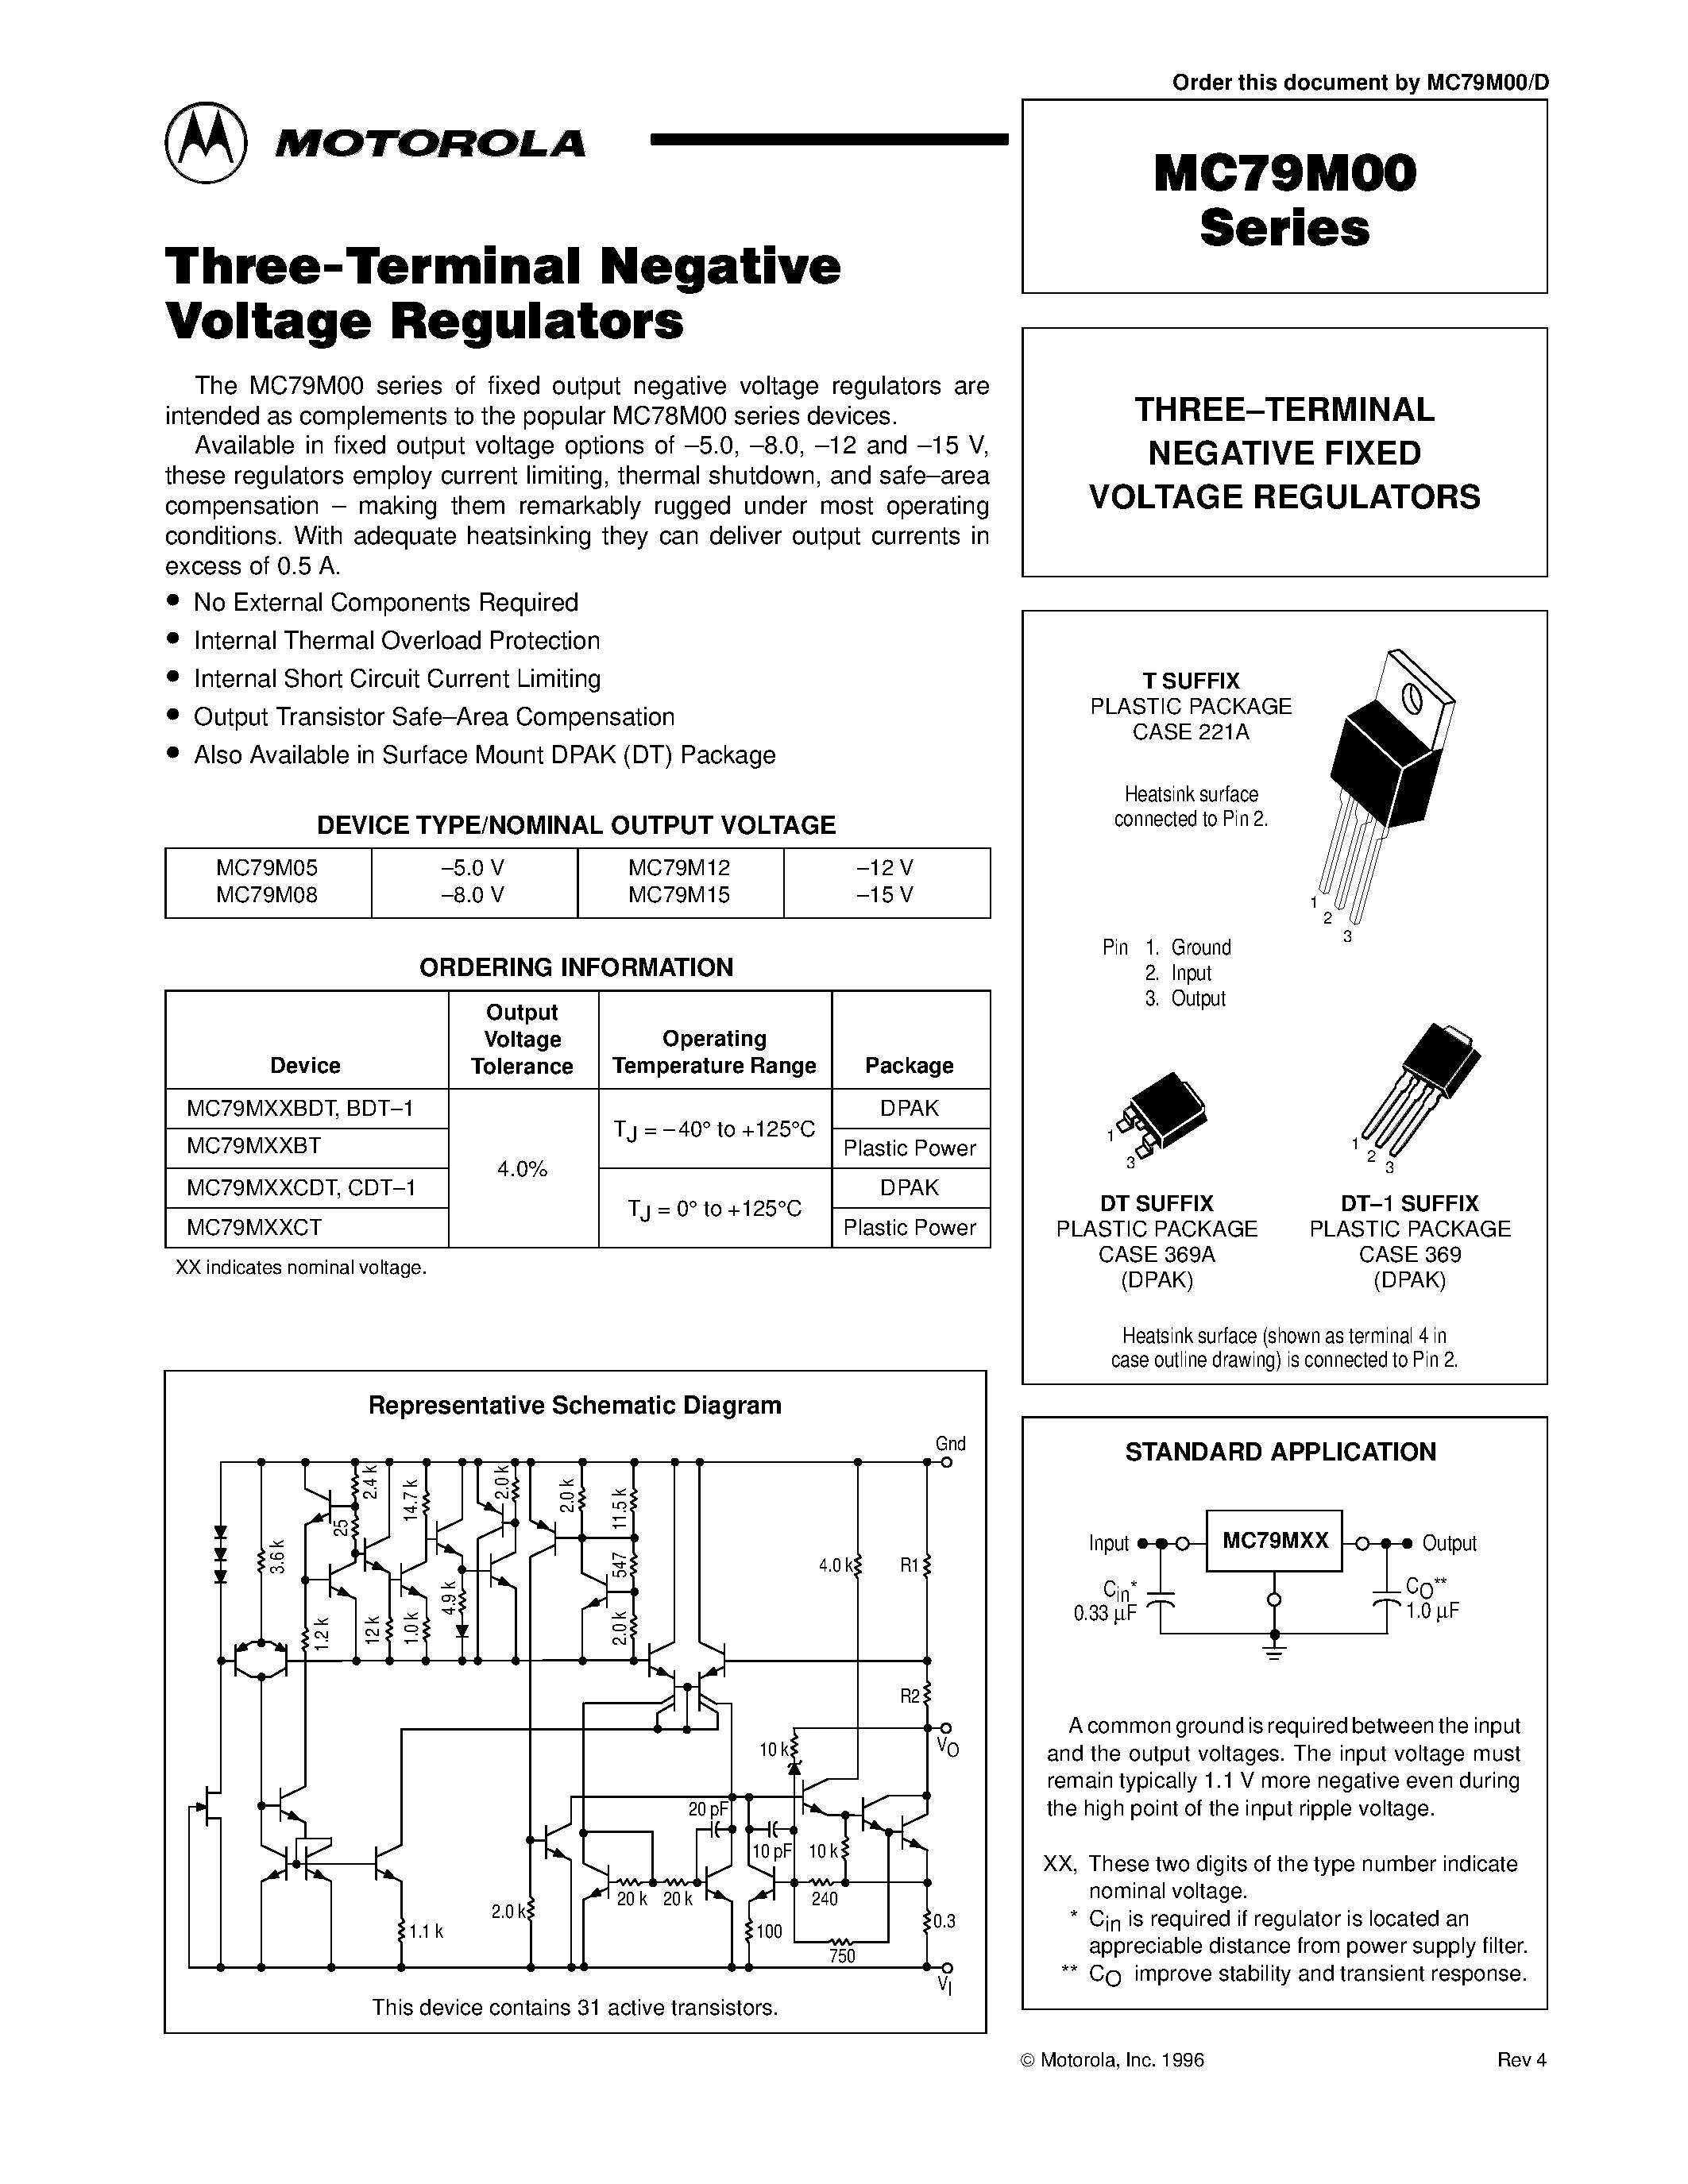 Datasheet MC79M15BDT-1 - THREE-TERMINAL NEGATIVE FIXED VOLTAGE REGULATORS page 1